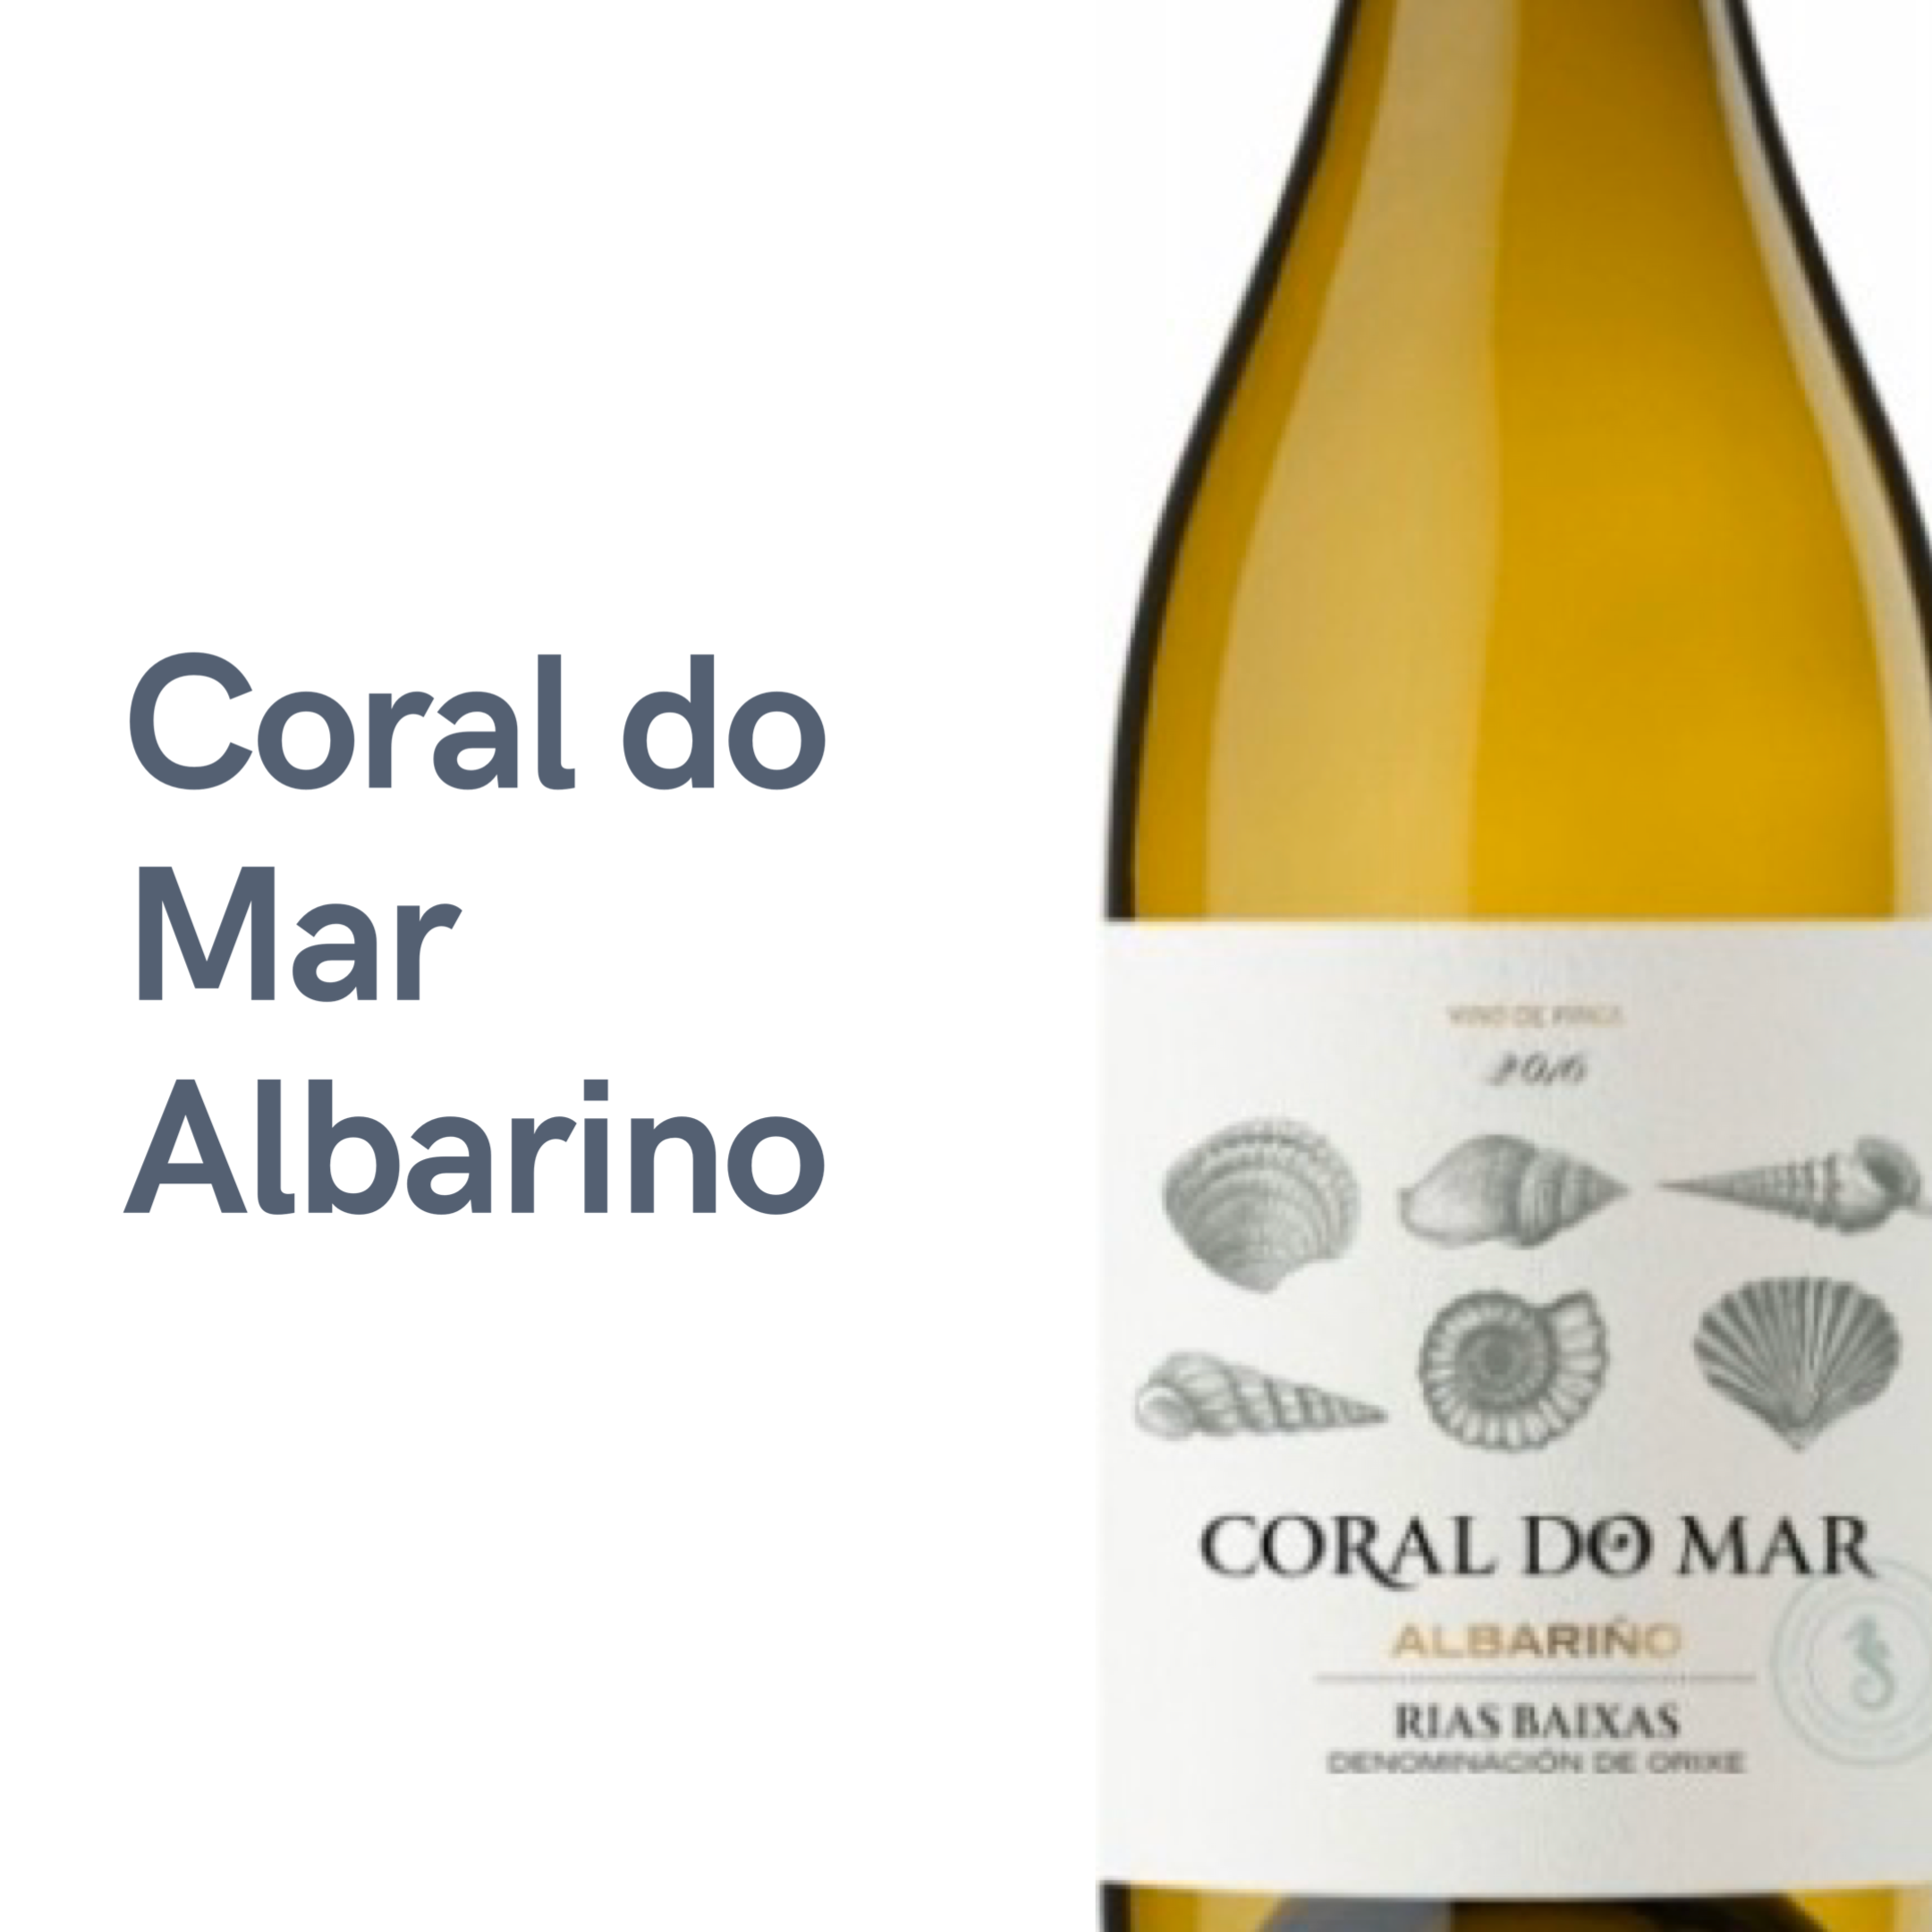 Coral do Mar Albarino (6 bottles) | The Wine Cellar